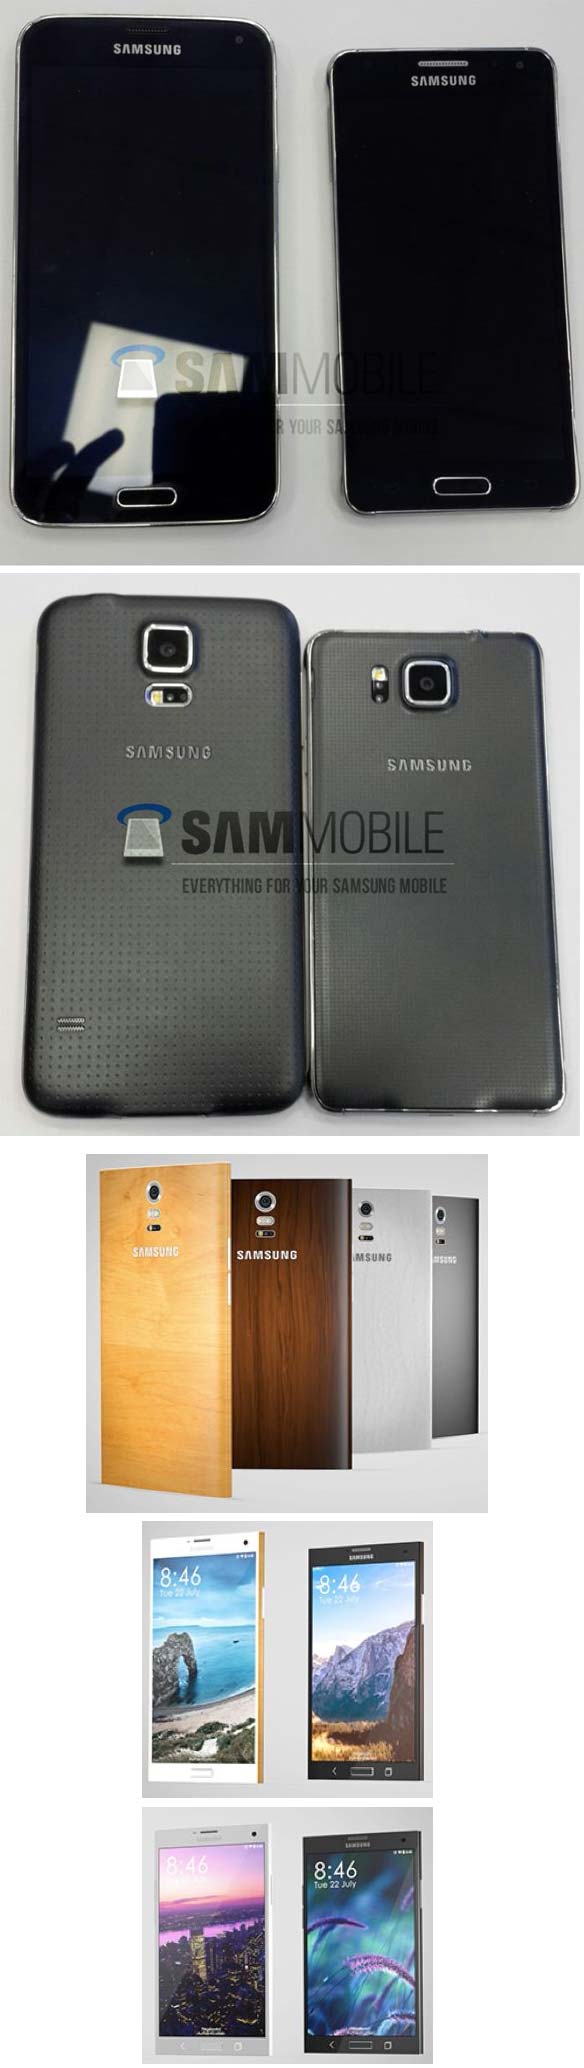 Аппараты Galaxy Alpha и Galaxy Note 4 от Samsung 